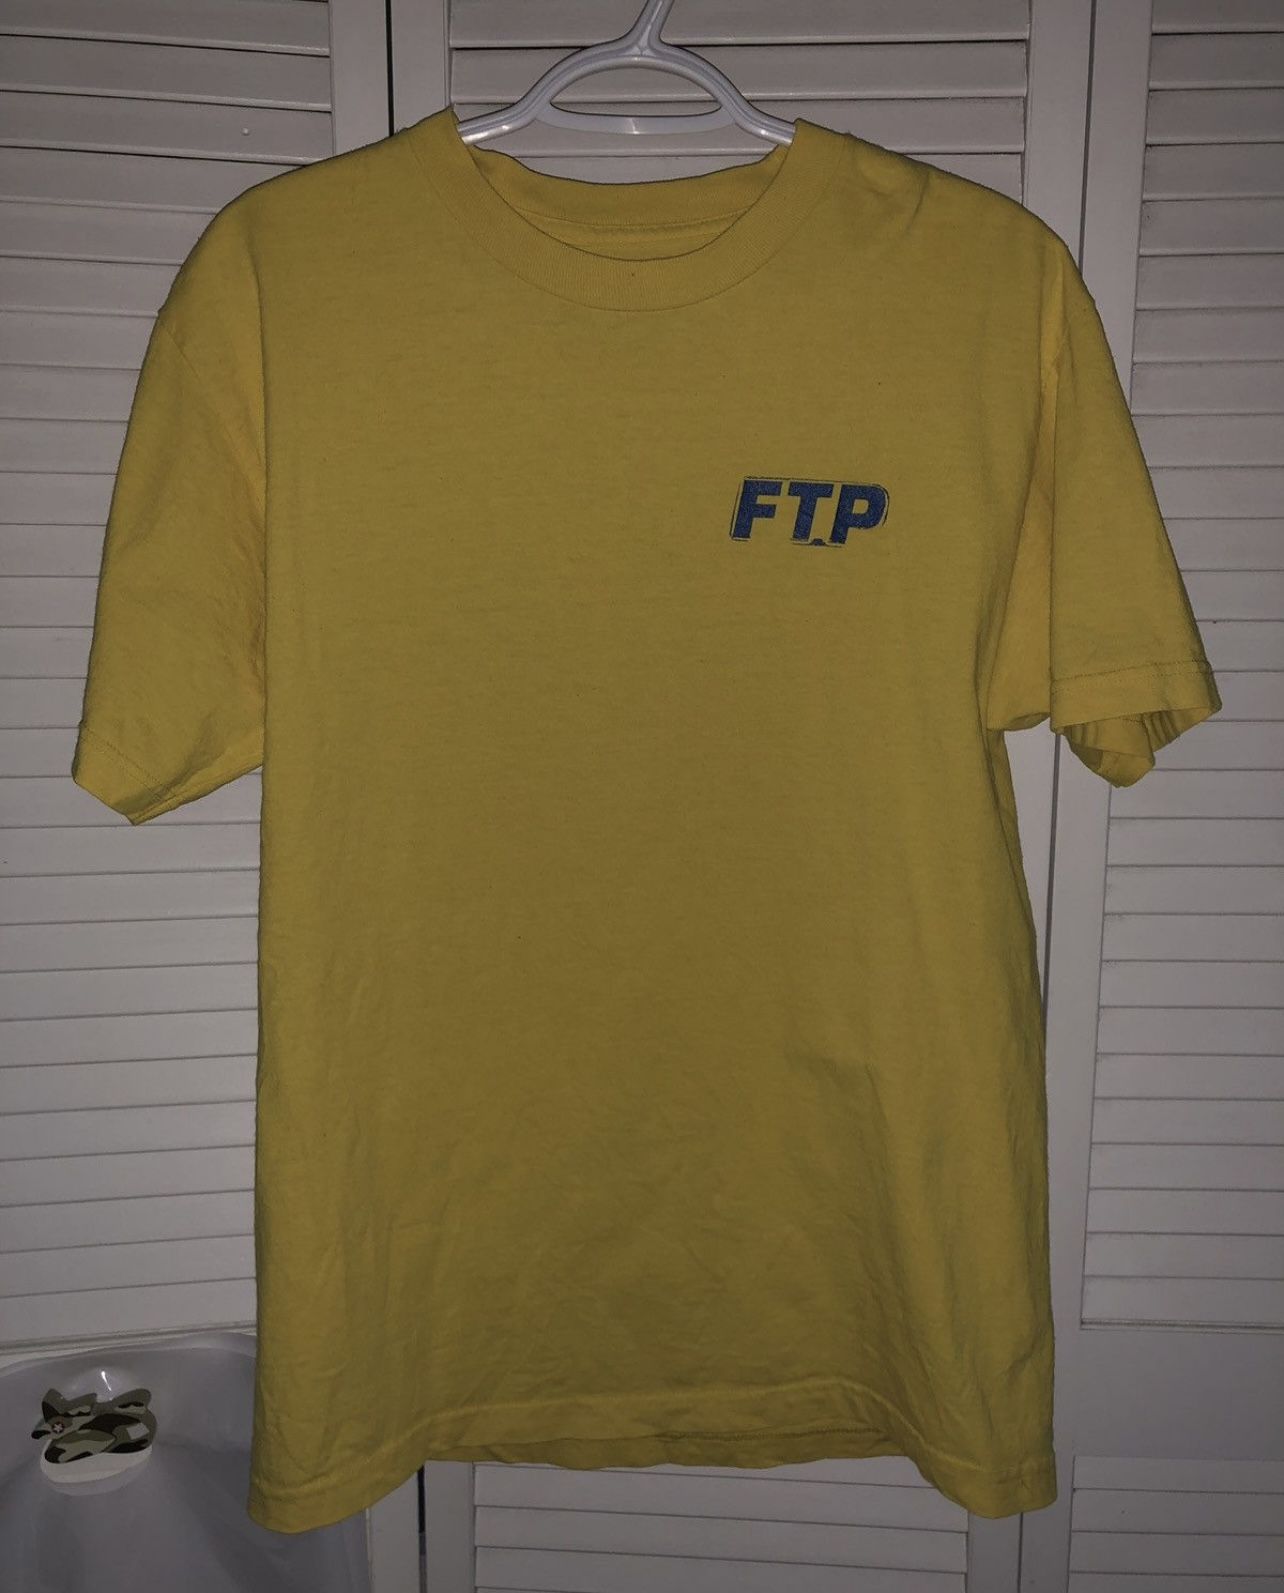 FTP ‘Stamp’ shirt RARE VINTAGE